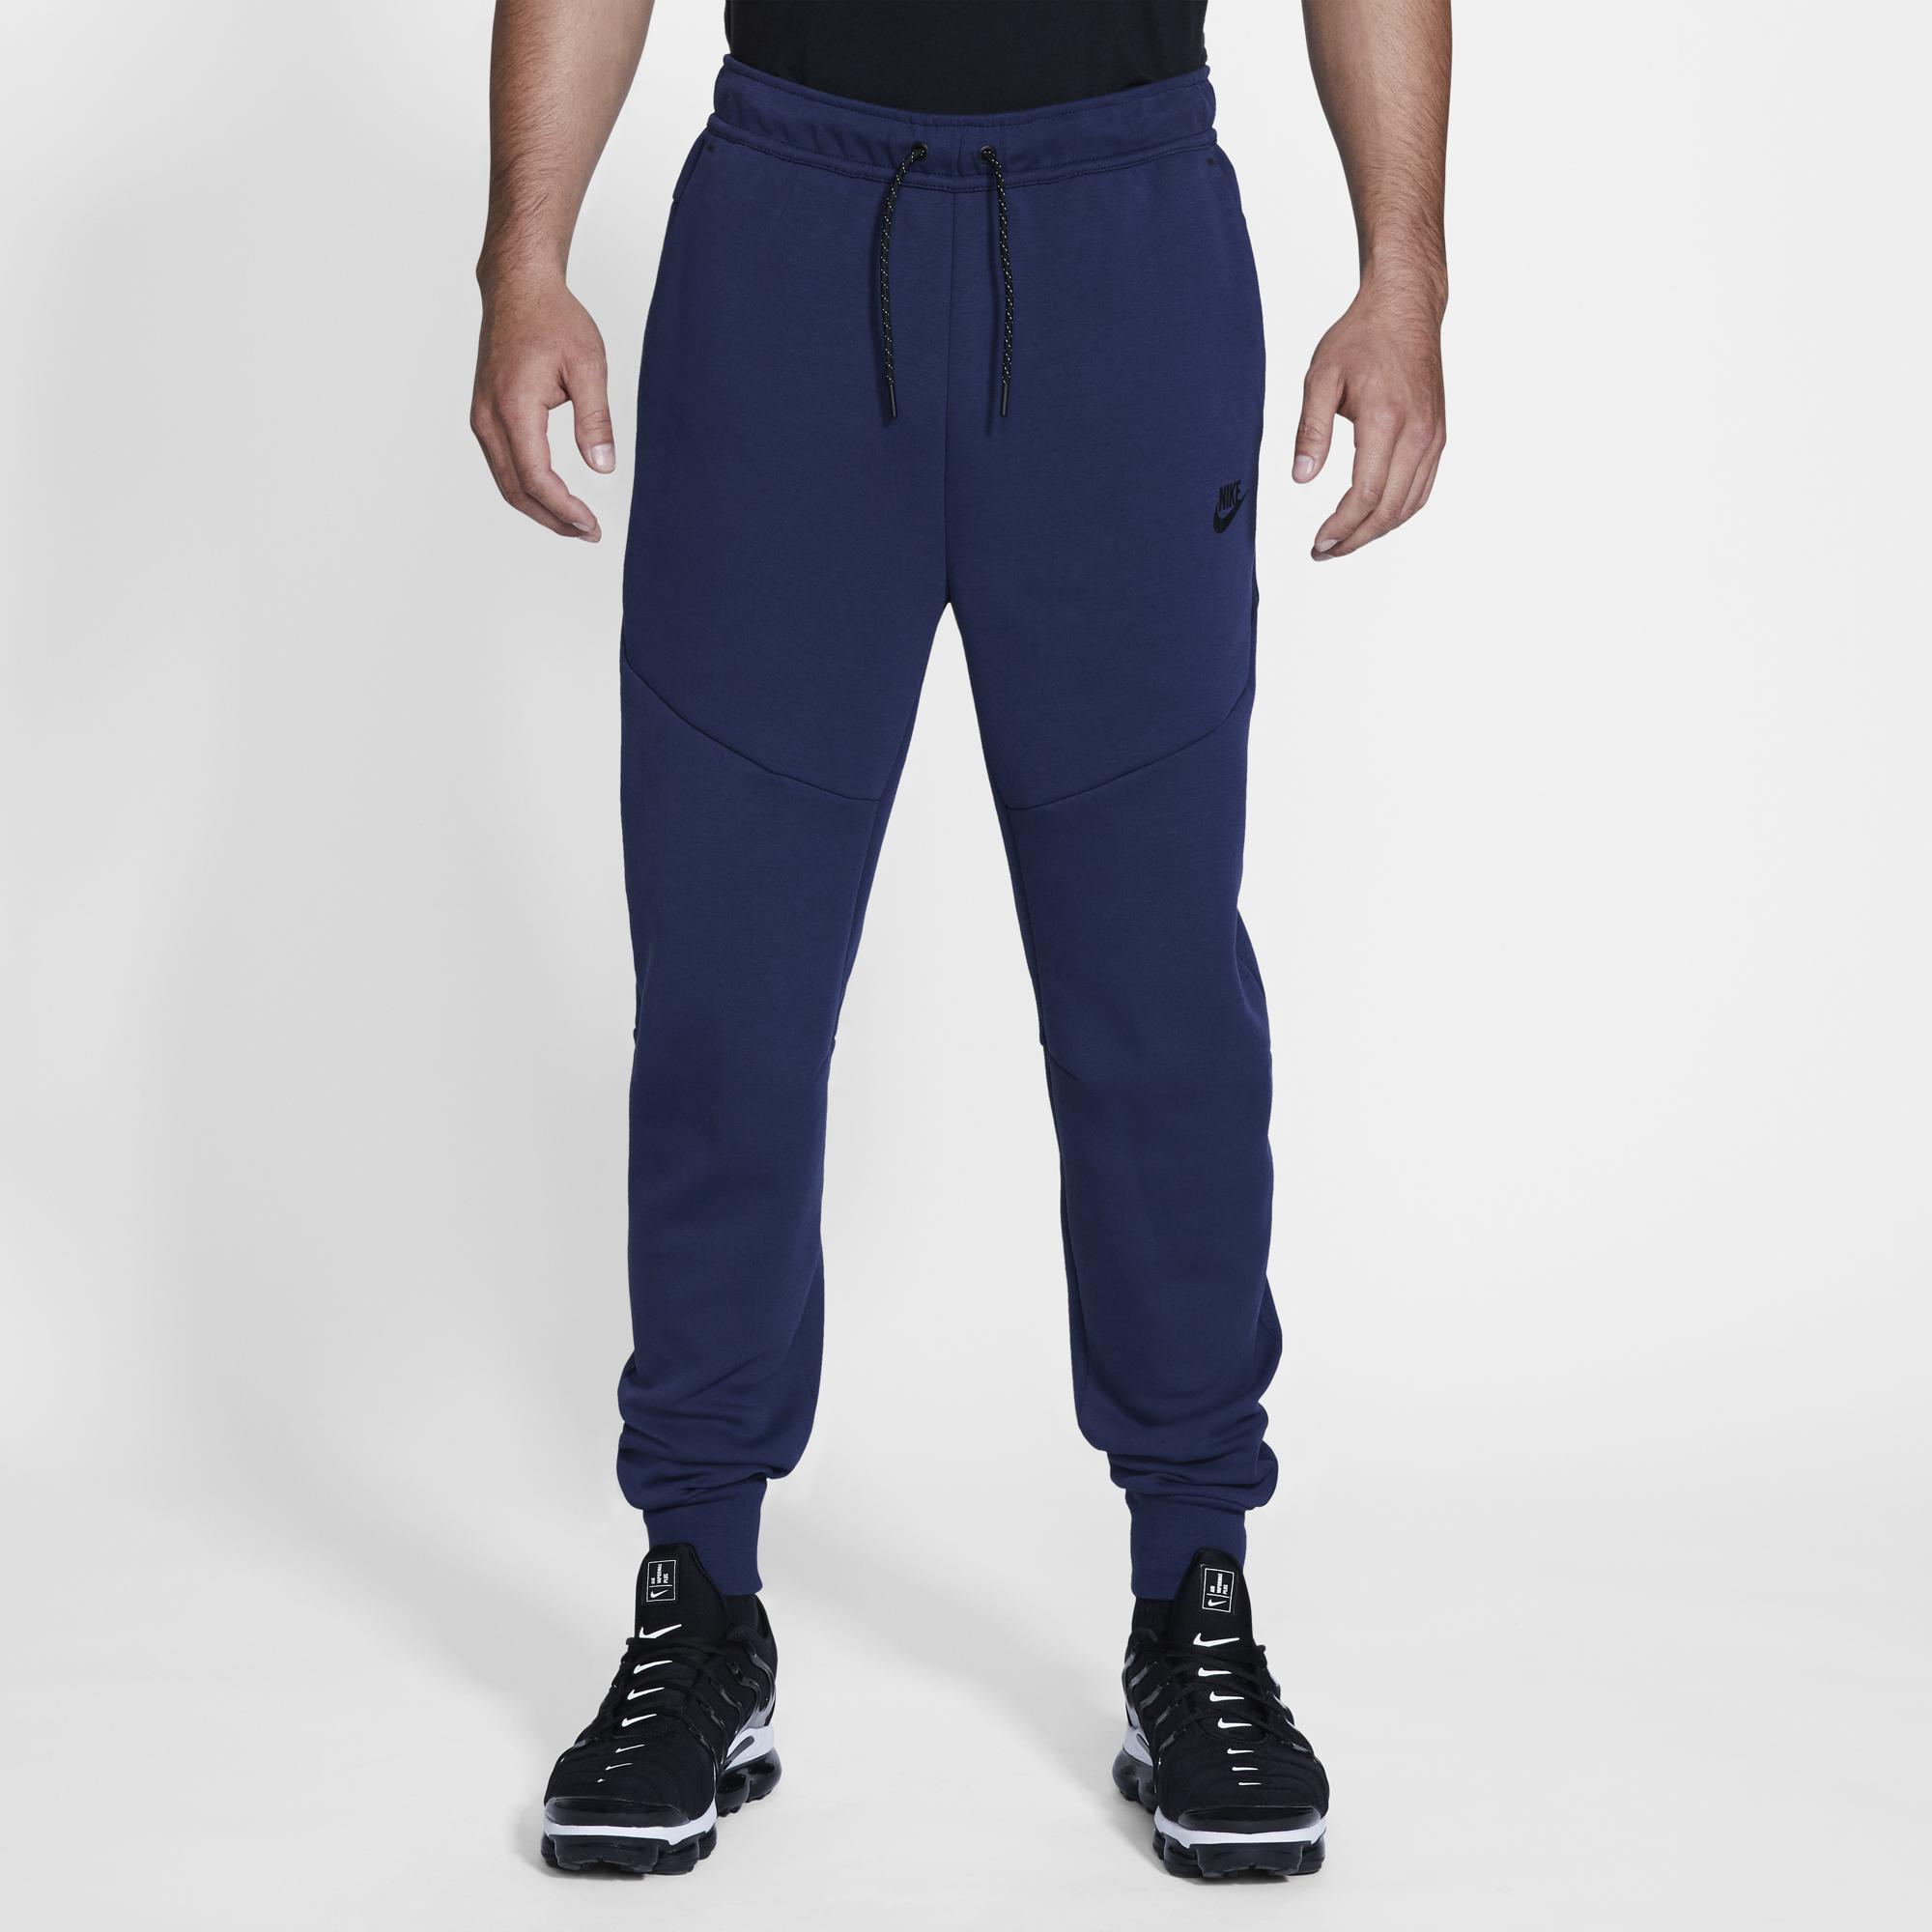 Nike Tech Fleece Joggers in Midnight Navy/Black (Blue) for Men - Save 14% |  Lyst